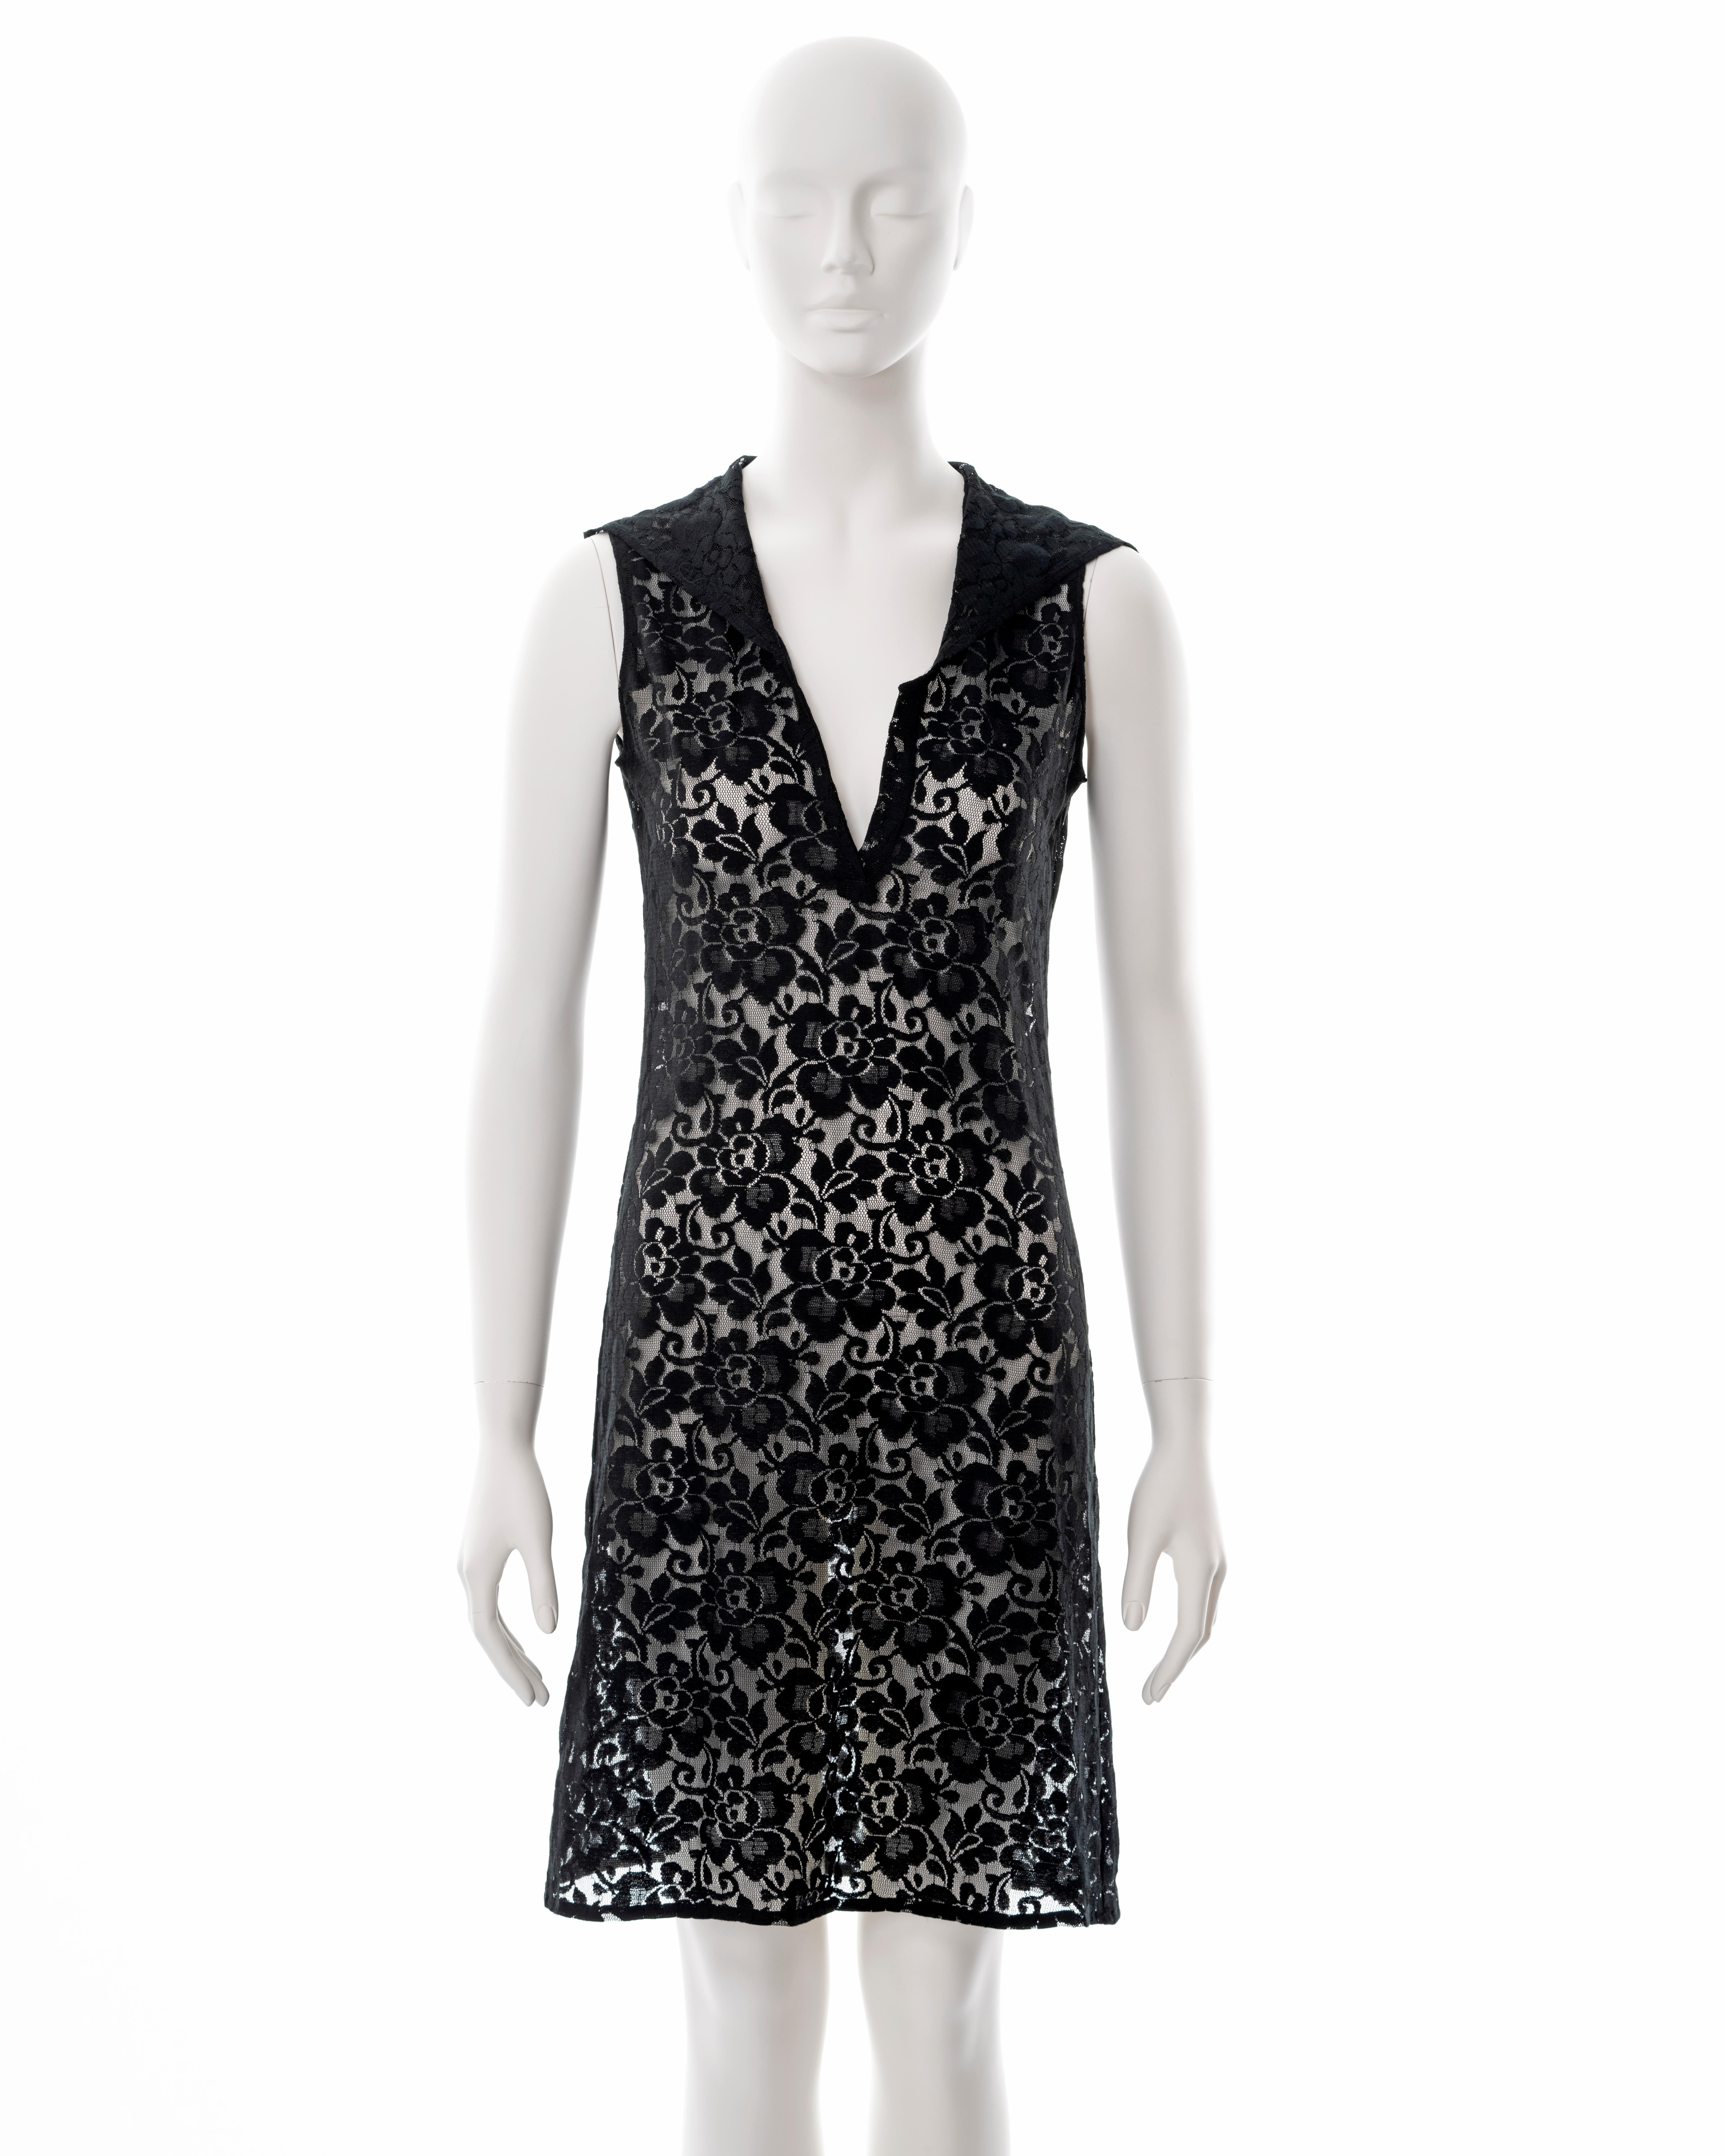 Women's Helmut Lang black lace hooded shift dress, ss 1996 For Sale